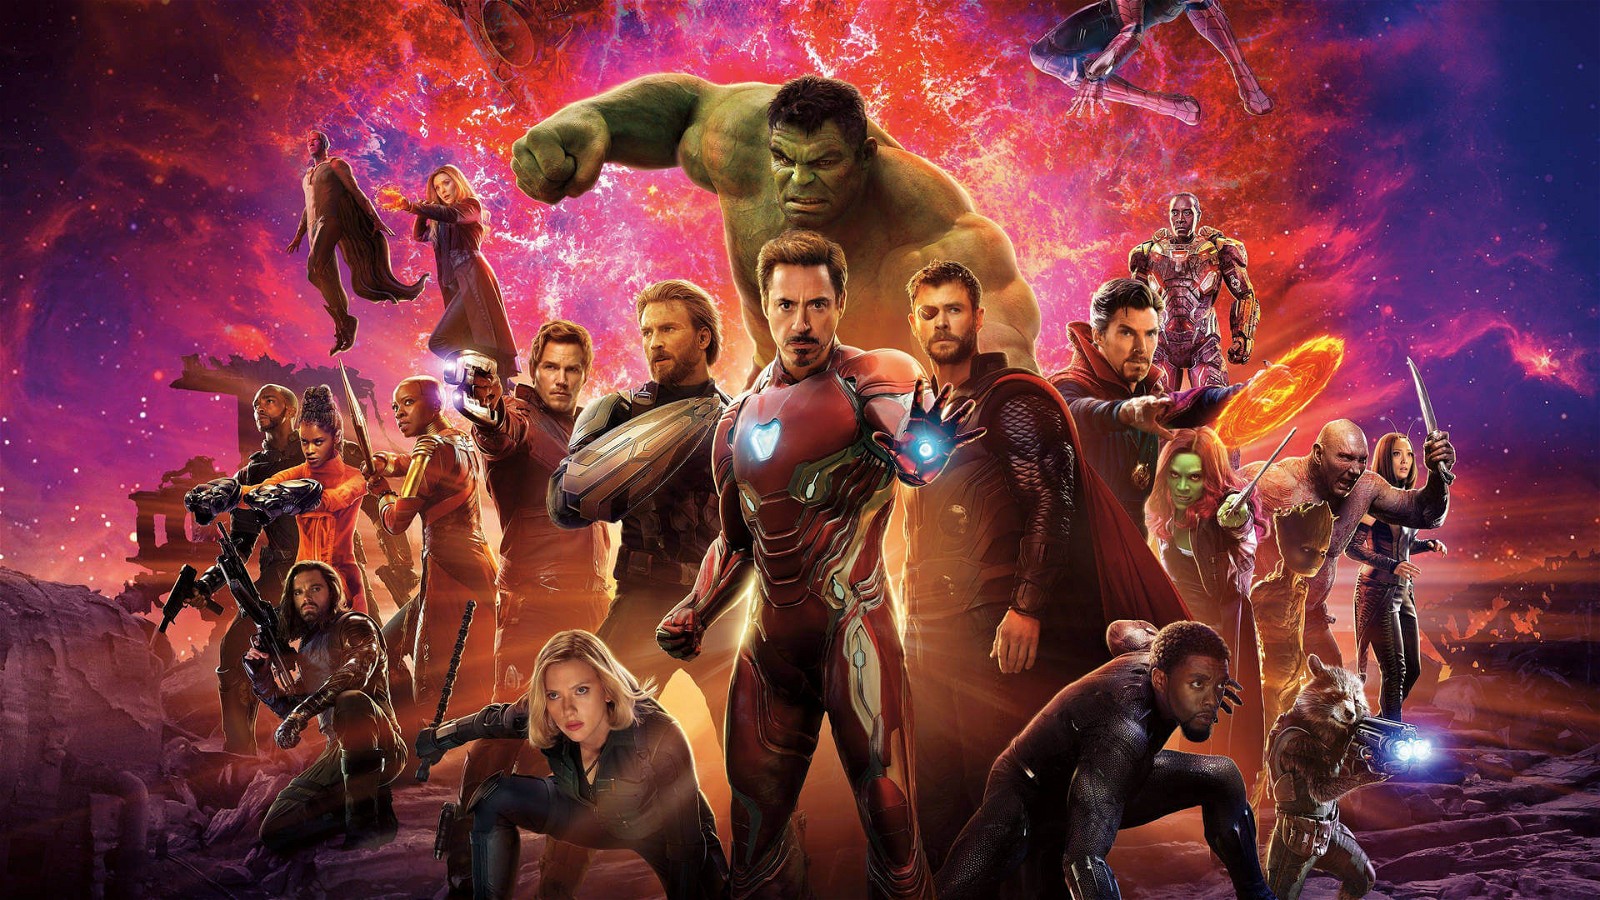 MCU's Avengers: Infinity War